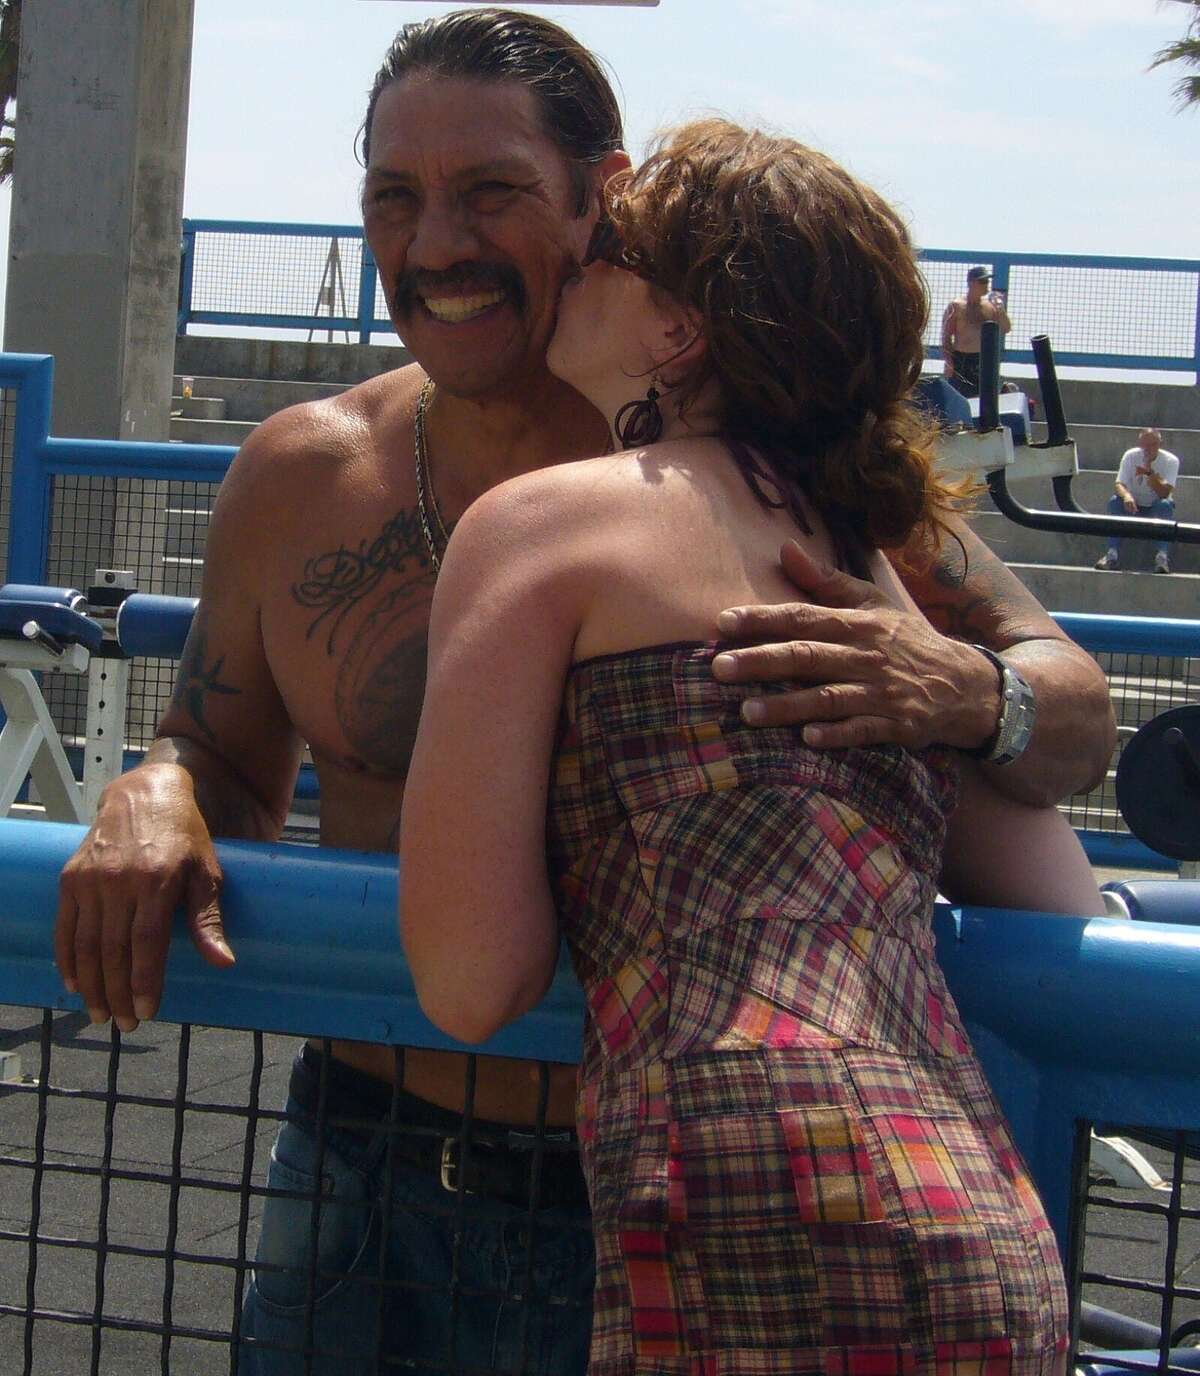 2. I kissed Danny Trejo (star of "Machete") on the cheek.